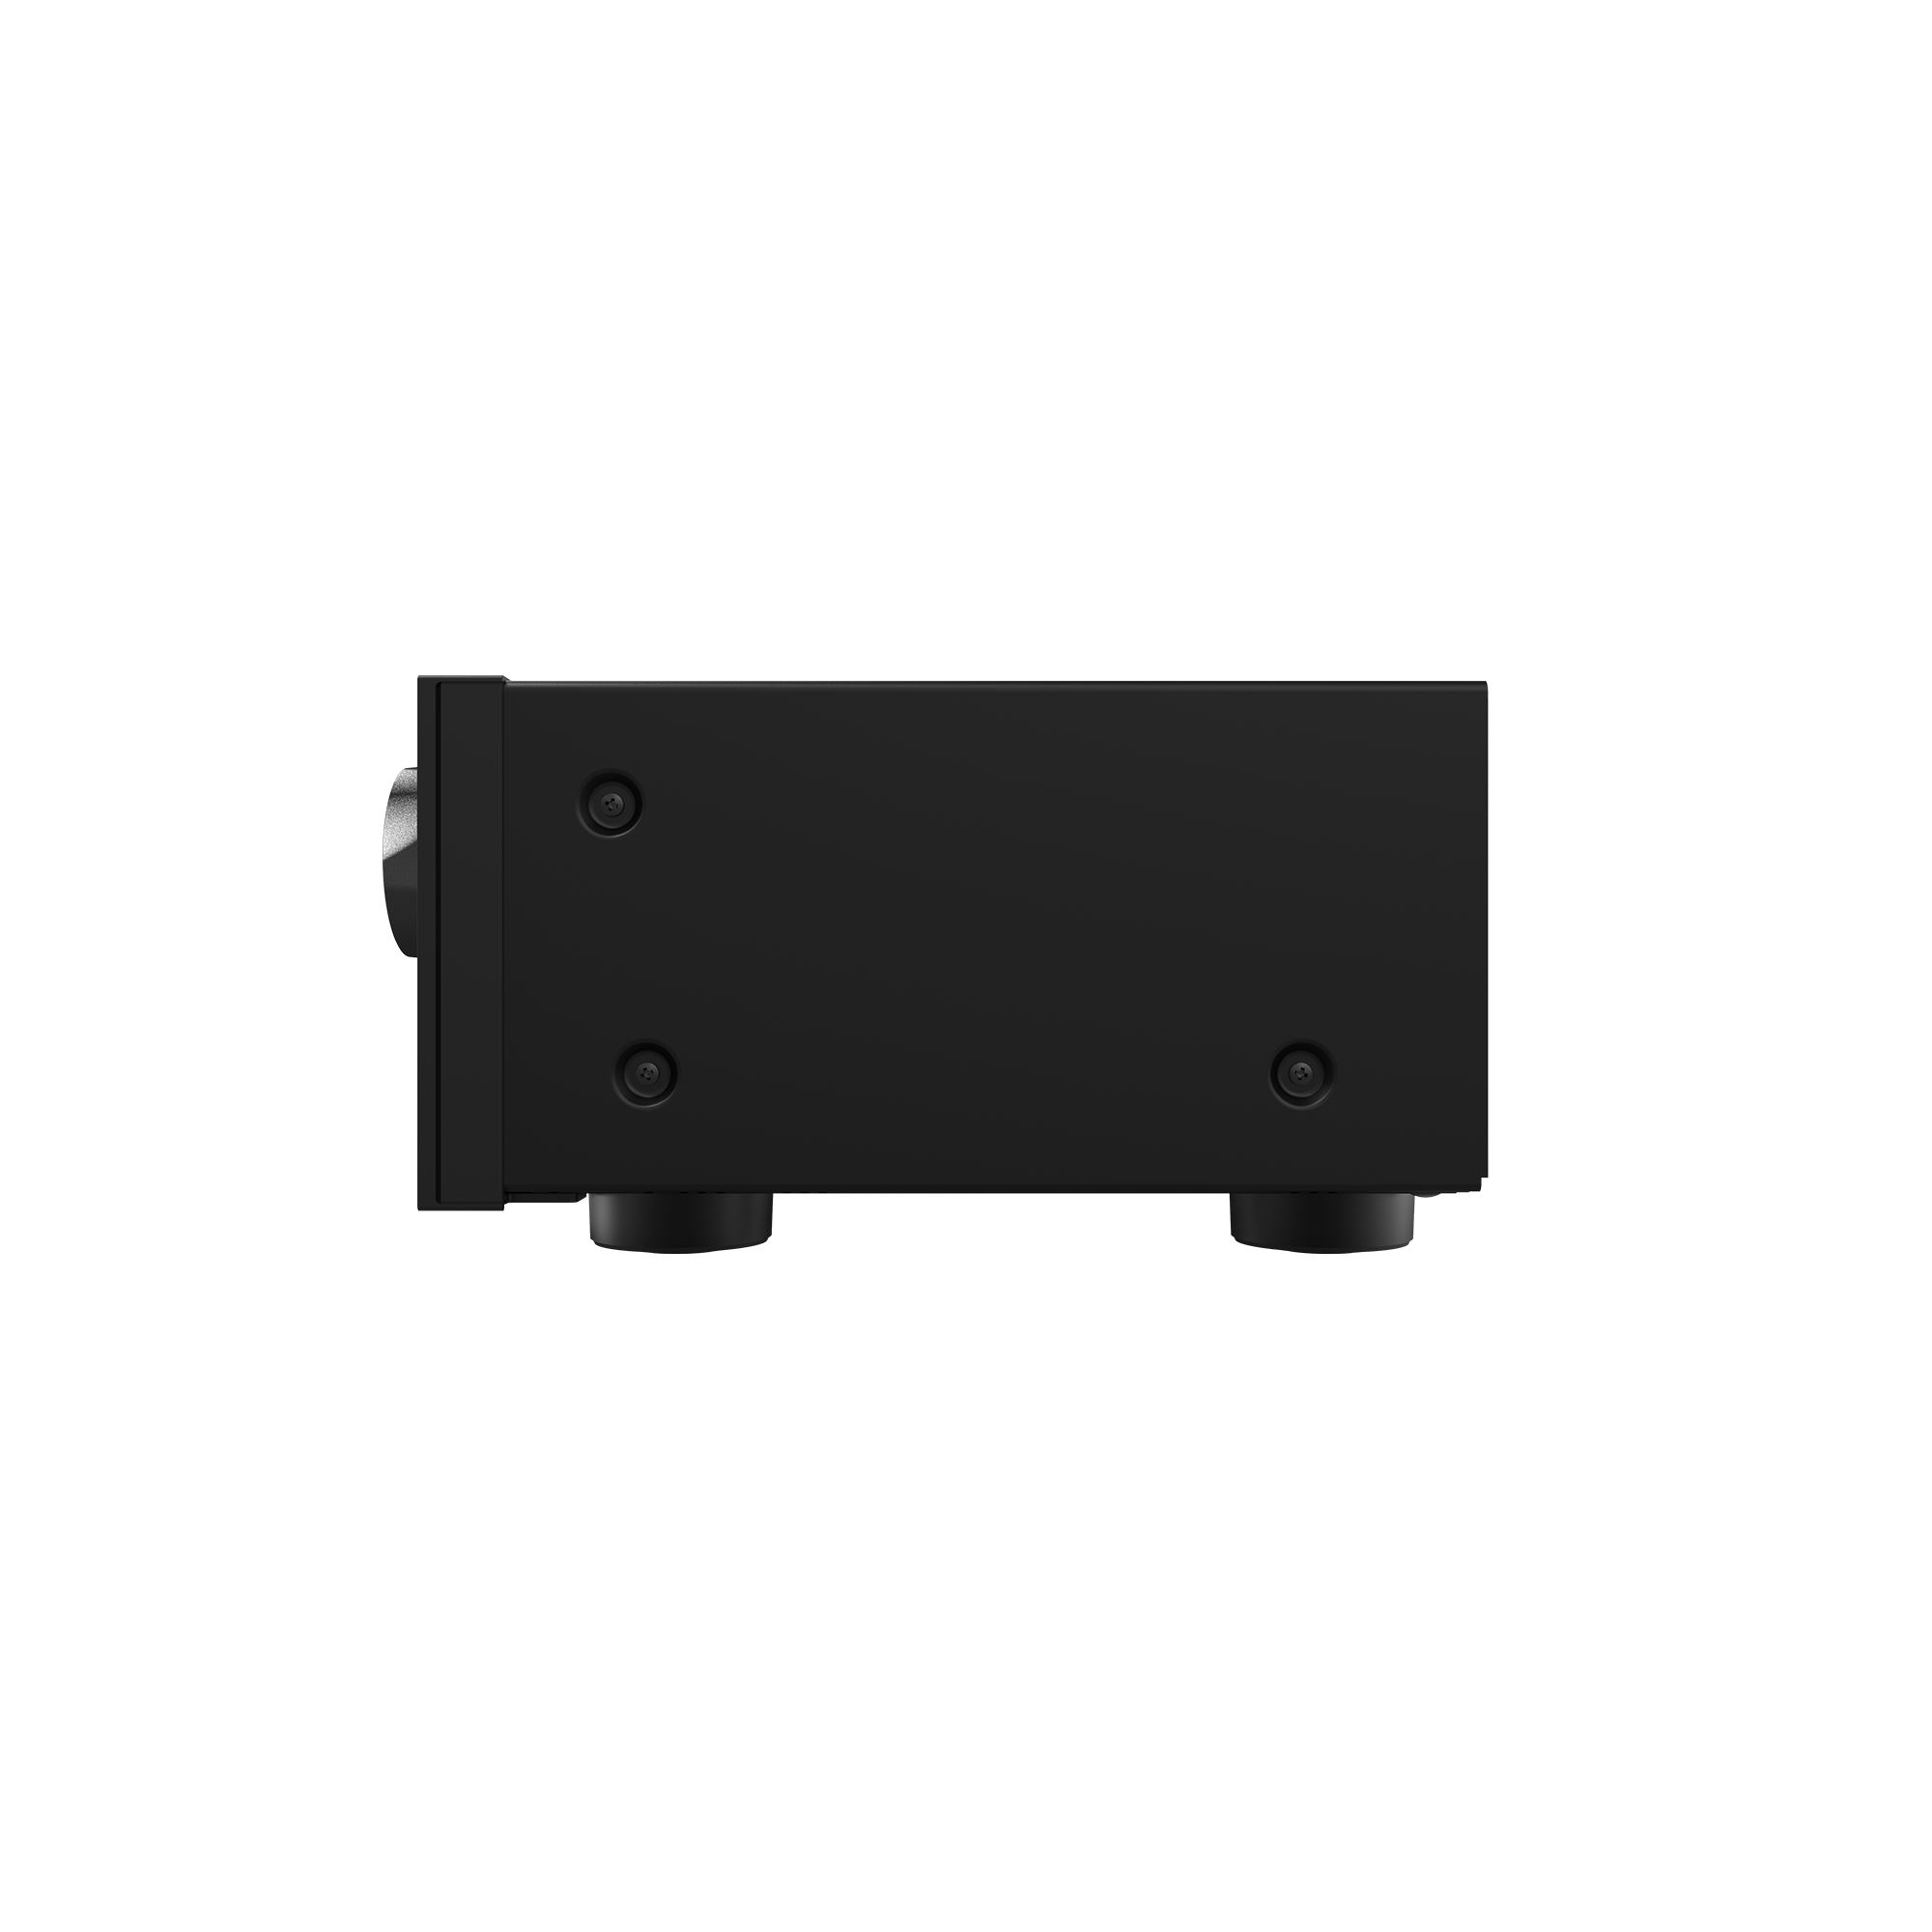 OnkyoTX-SR 3100 AV-Receiver 5.2 schwarz + Audioquest NRG X 1,8m